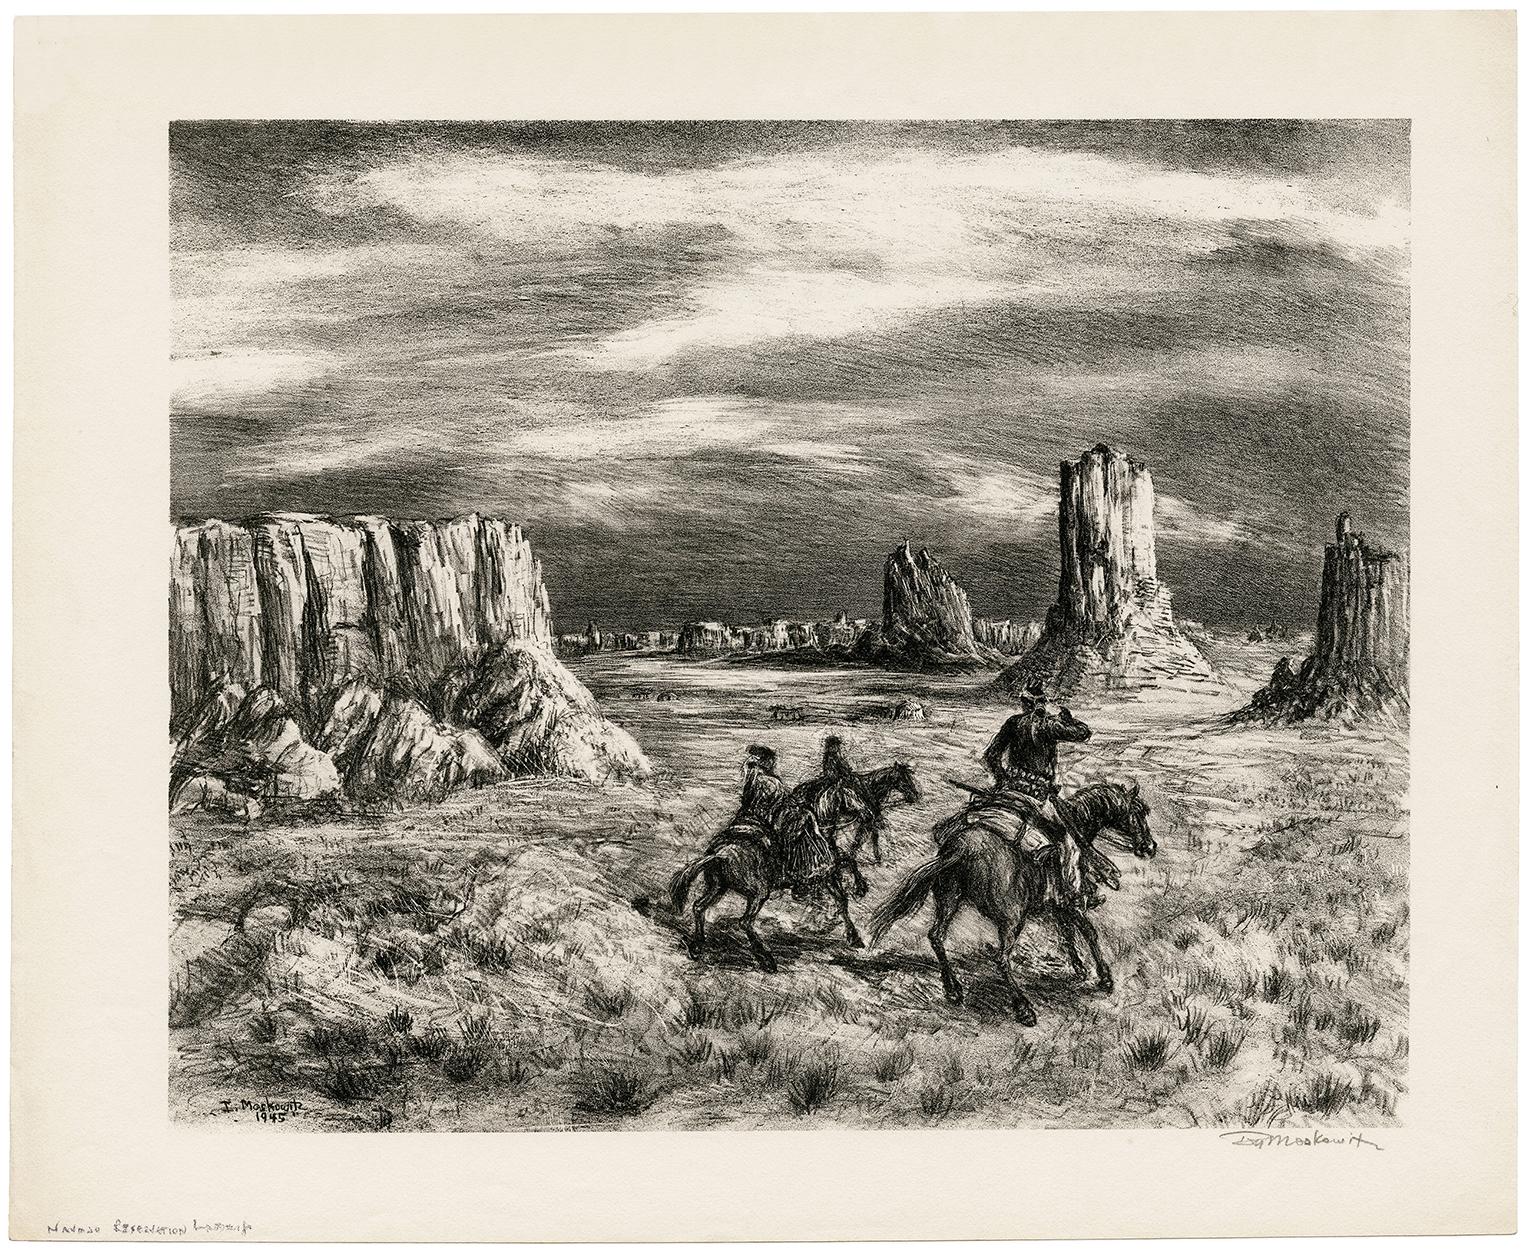 'Navajo Reservation Landscape' — 1940s Southwest Regionalism - Print by Ira Moskowitz